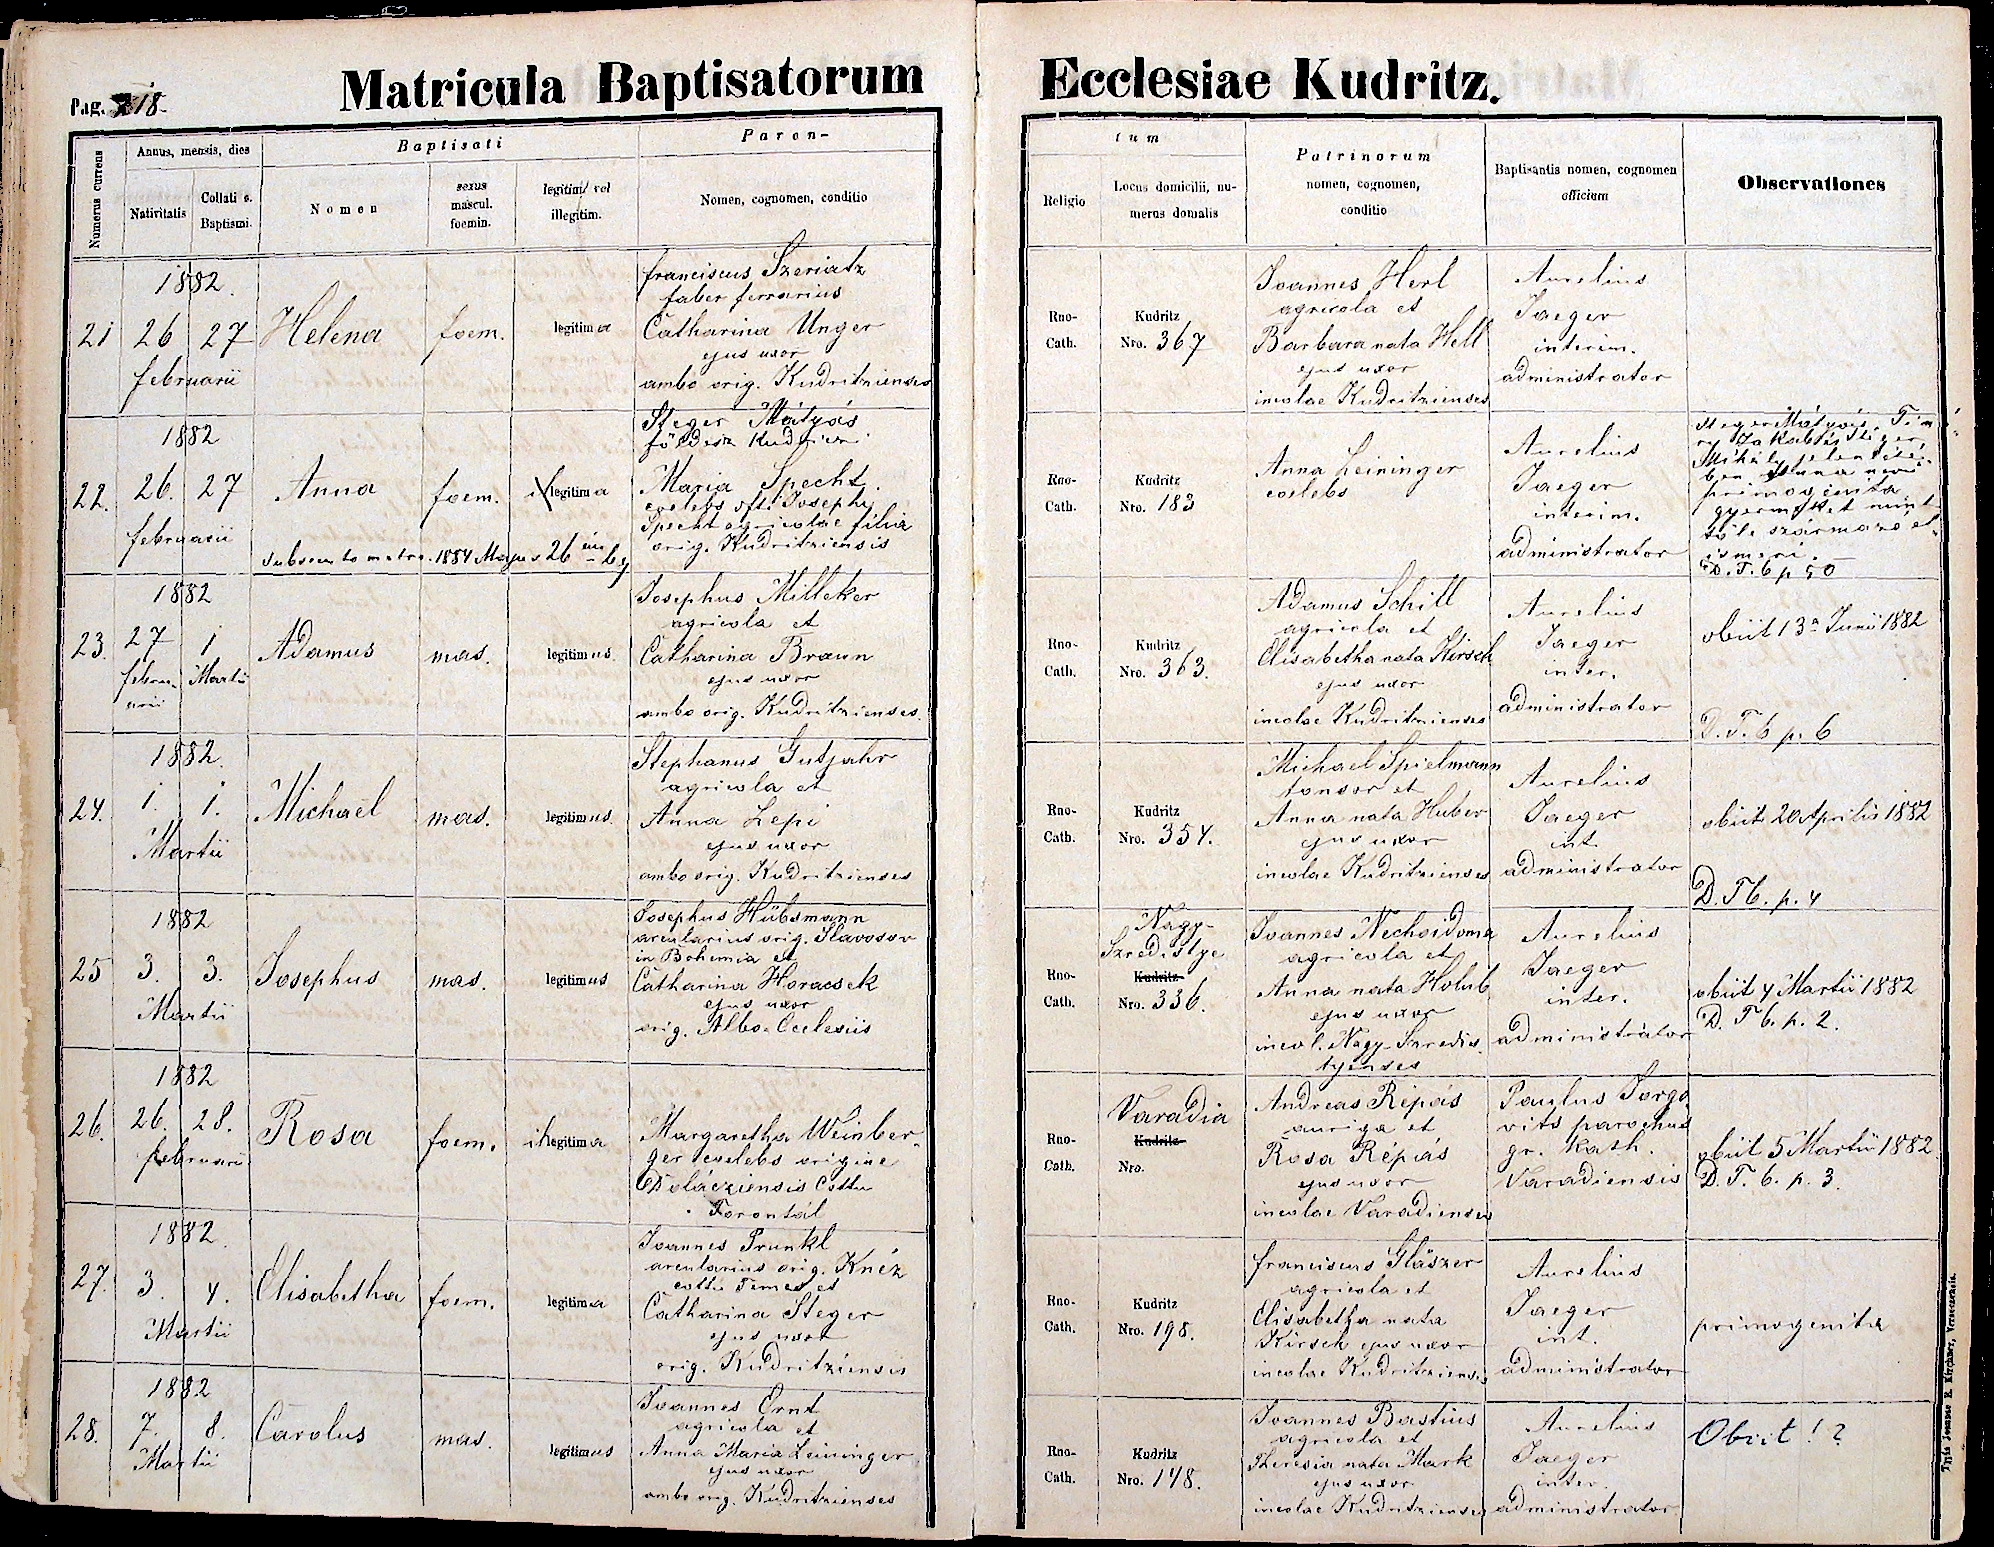 images/church_records/BIRTHS/1880-1883B/1882/218